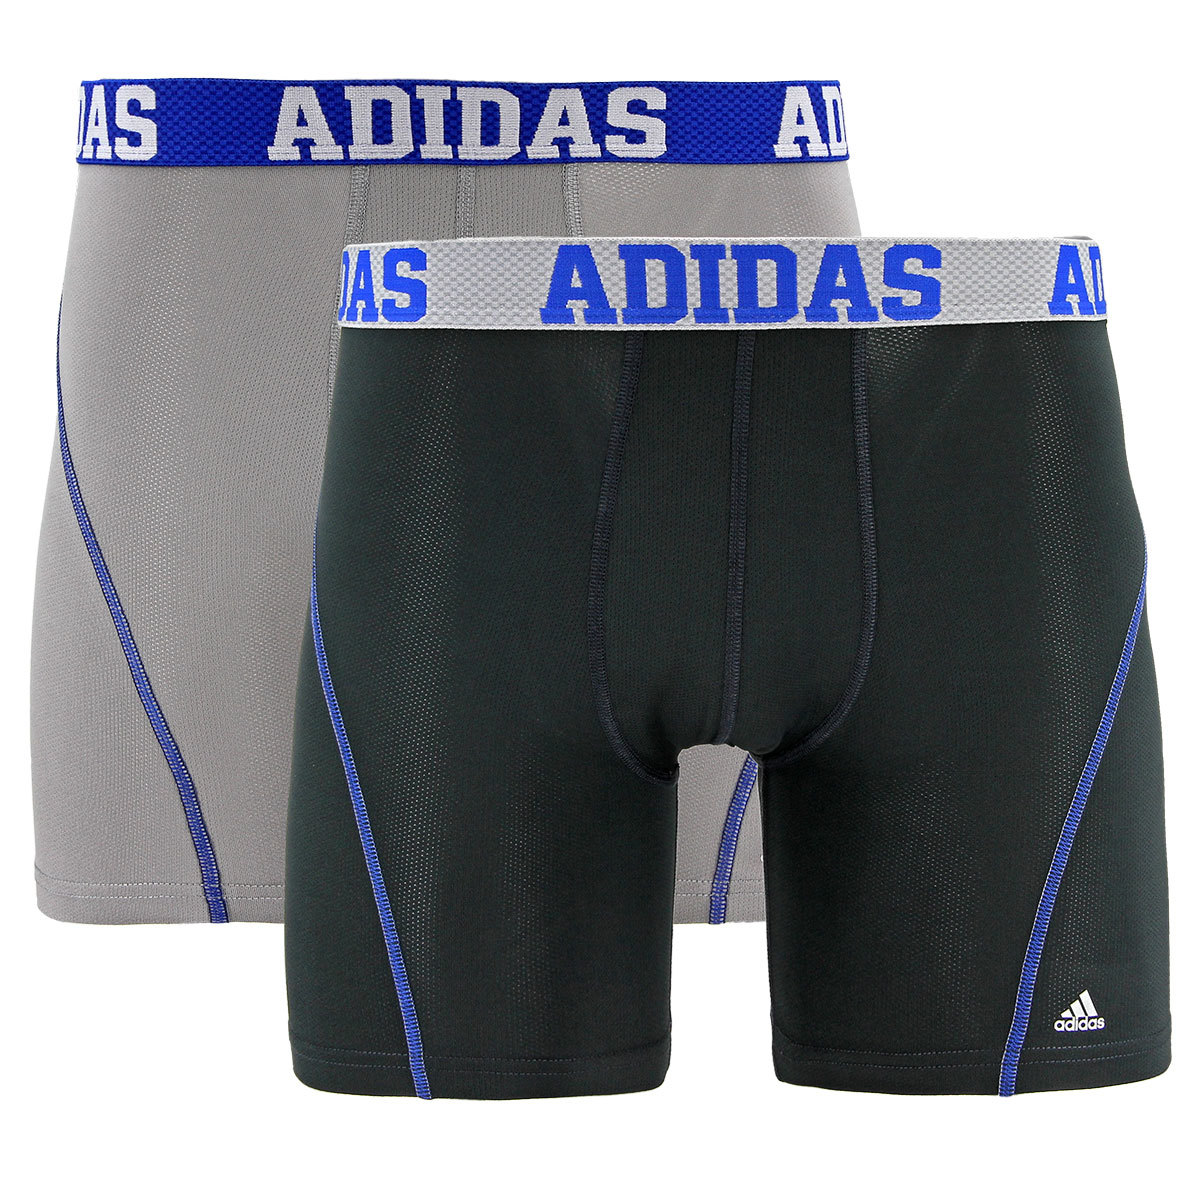 Adidas Men's Sport Performance Climacool Boxer Briefs, 2 Pack